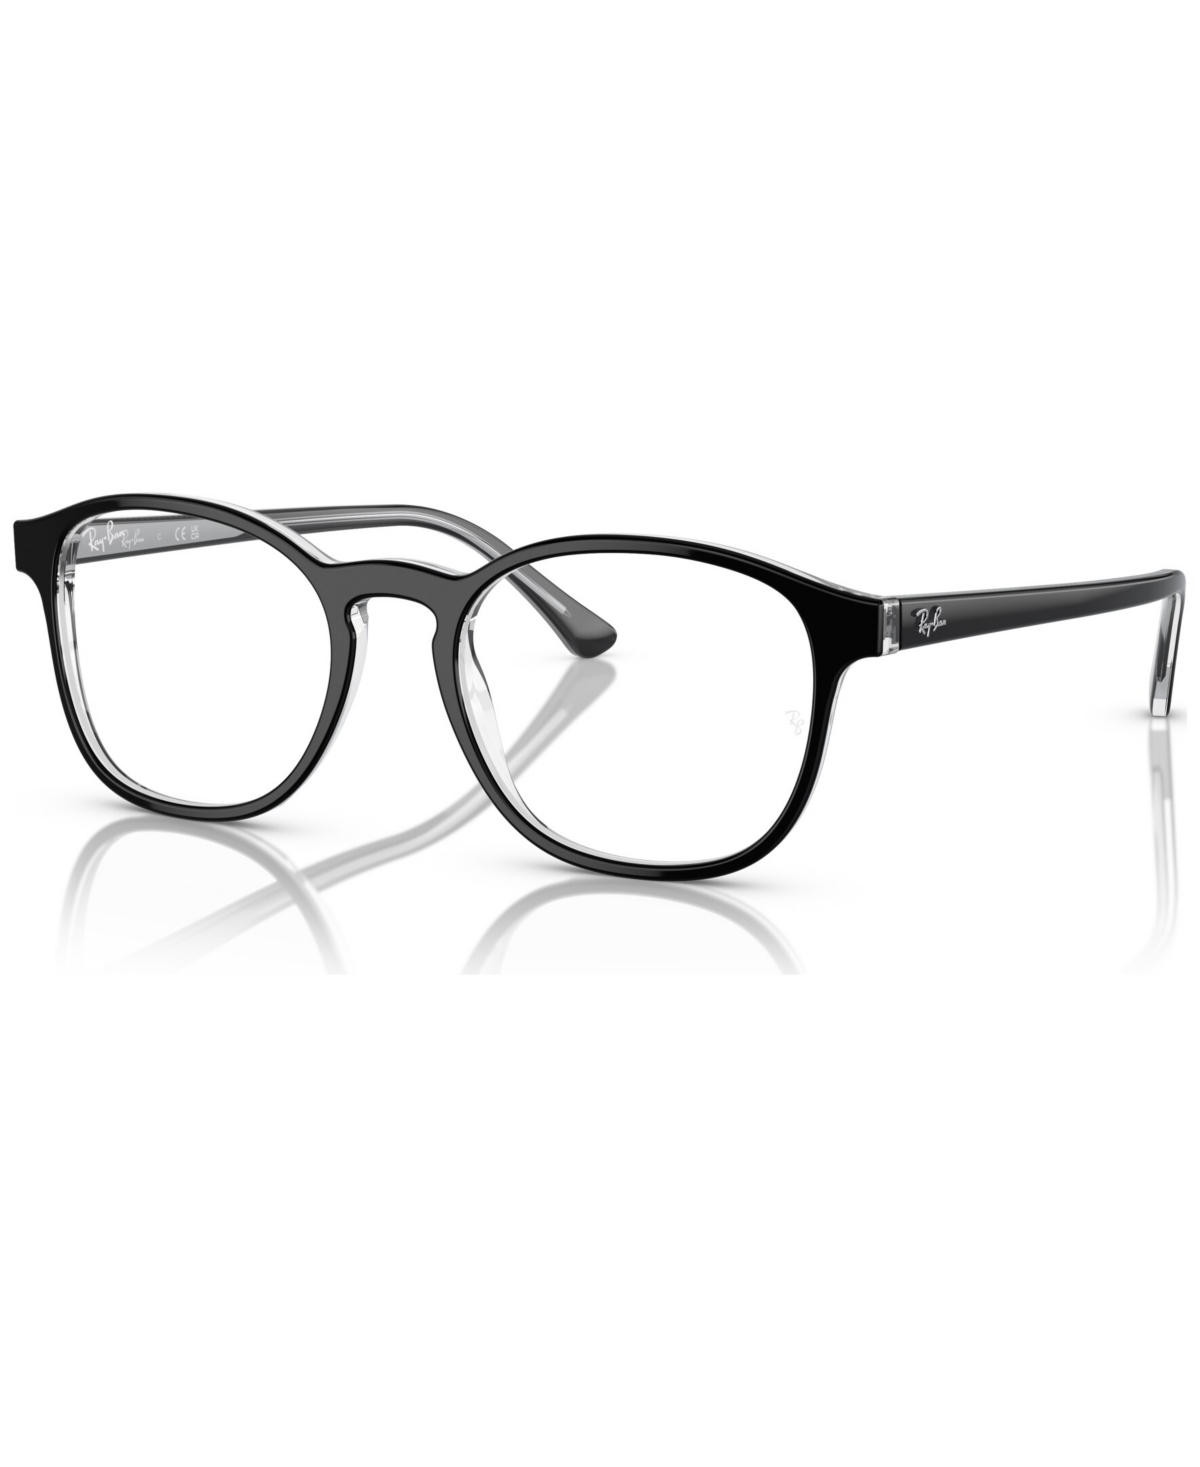 Unisex Phantos Eyeglasses, RB5417 52 - Black on Transparent